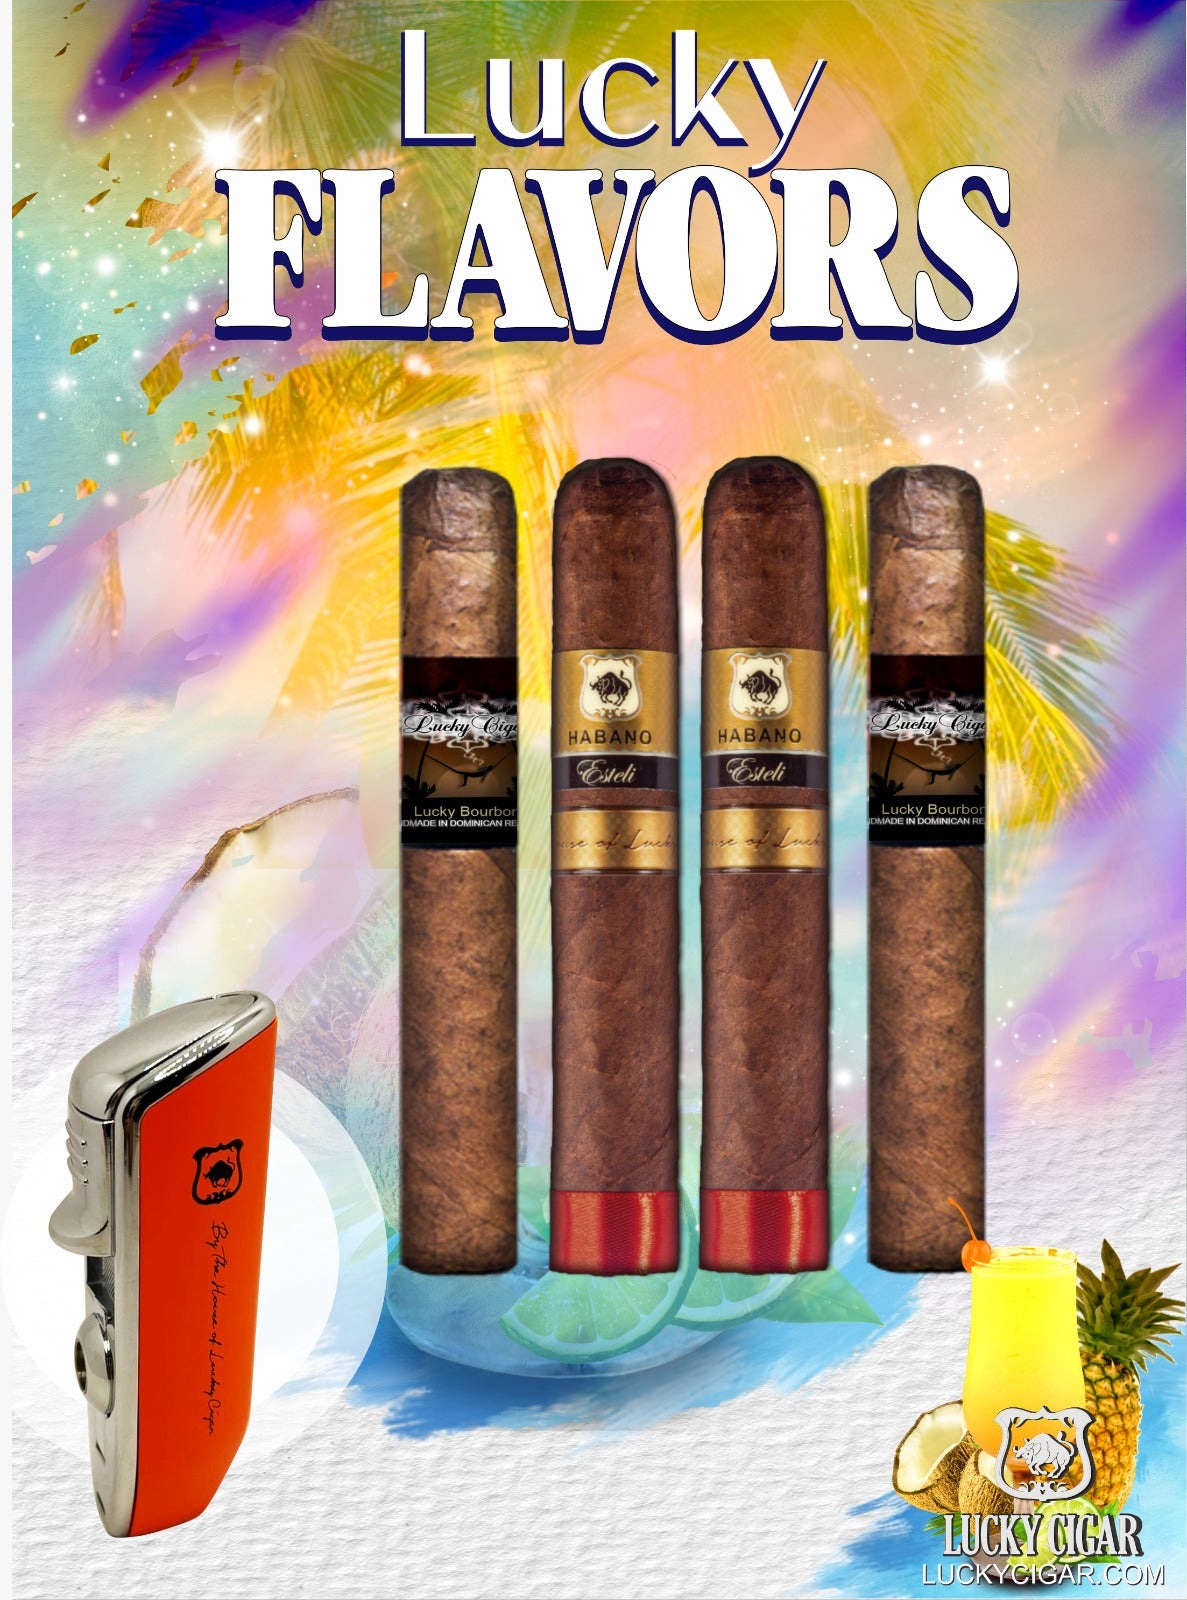 Cigar Gift Sets: Set of 4 Cigars, 2 Habano Esteli, 2 Bourbon with Torch